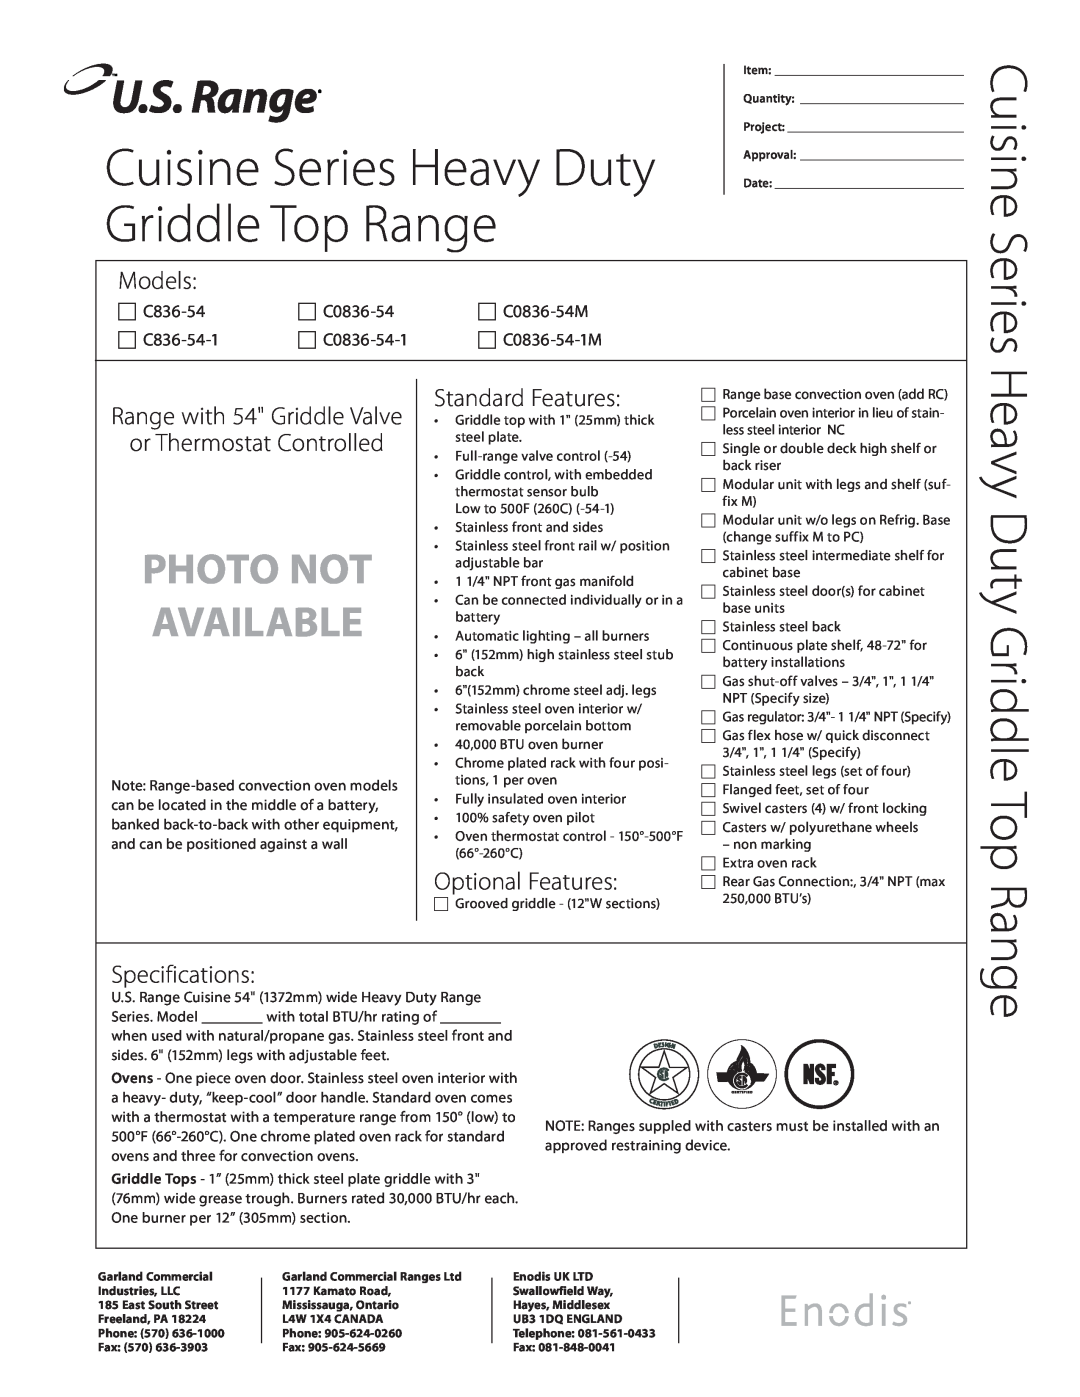 Garland specifications Cuisine,  C0836-54M,  C836-54-1,  C0836-54-1, Heavy Duty Griddle Top Range, Series 